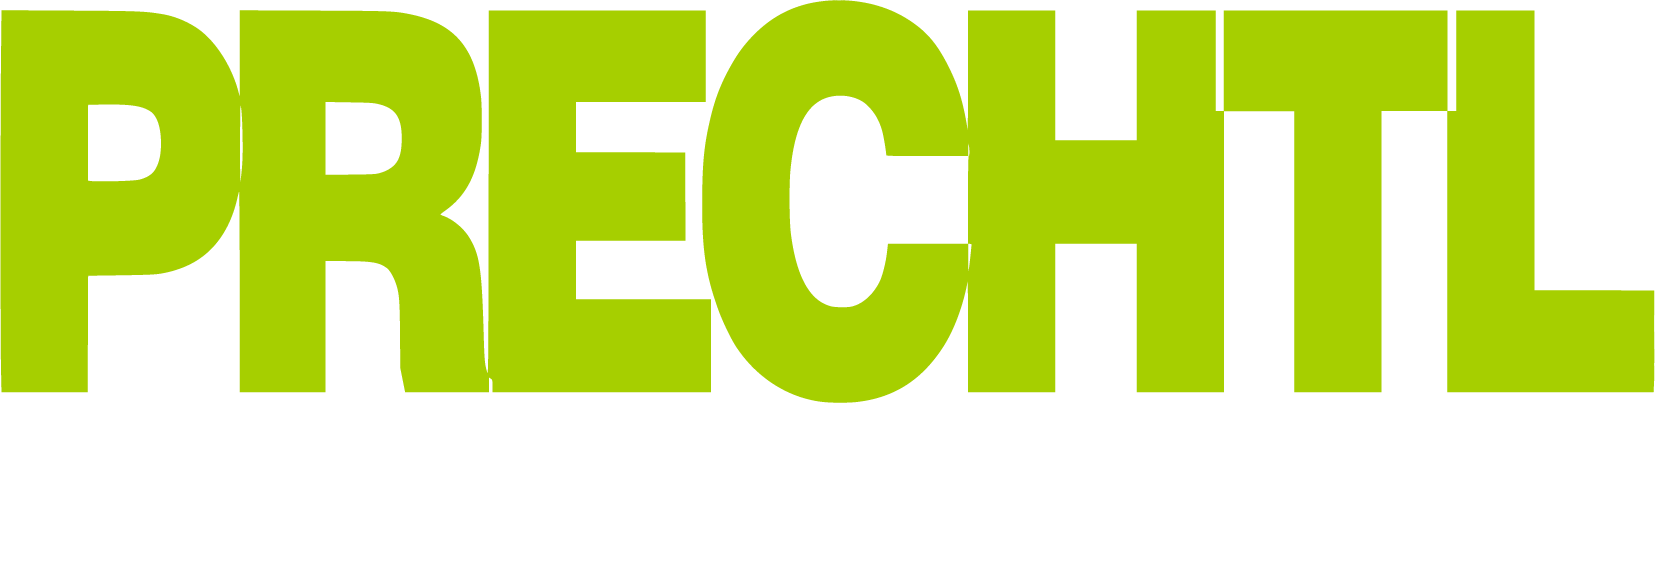 Prechtl Engineering Logo